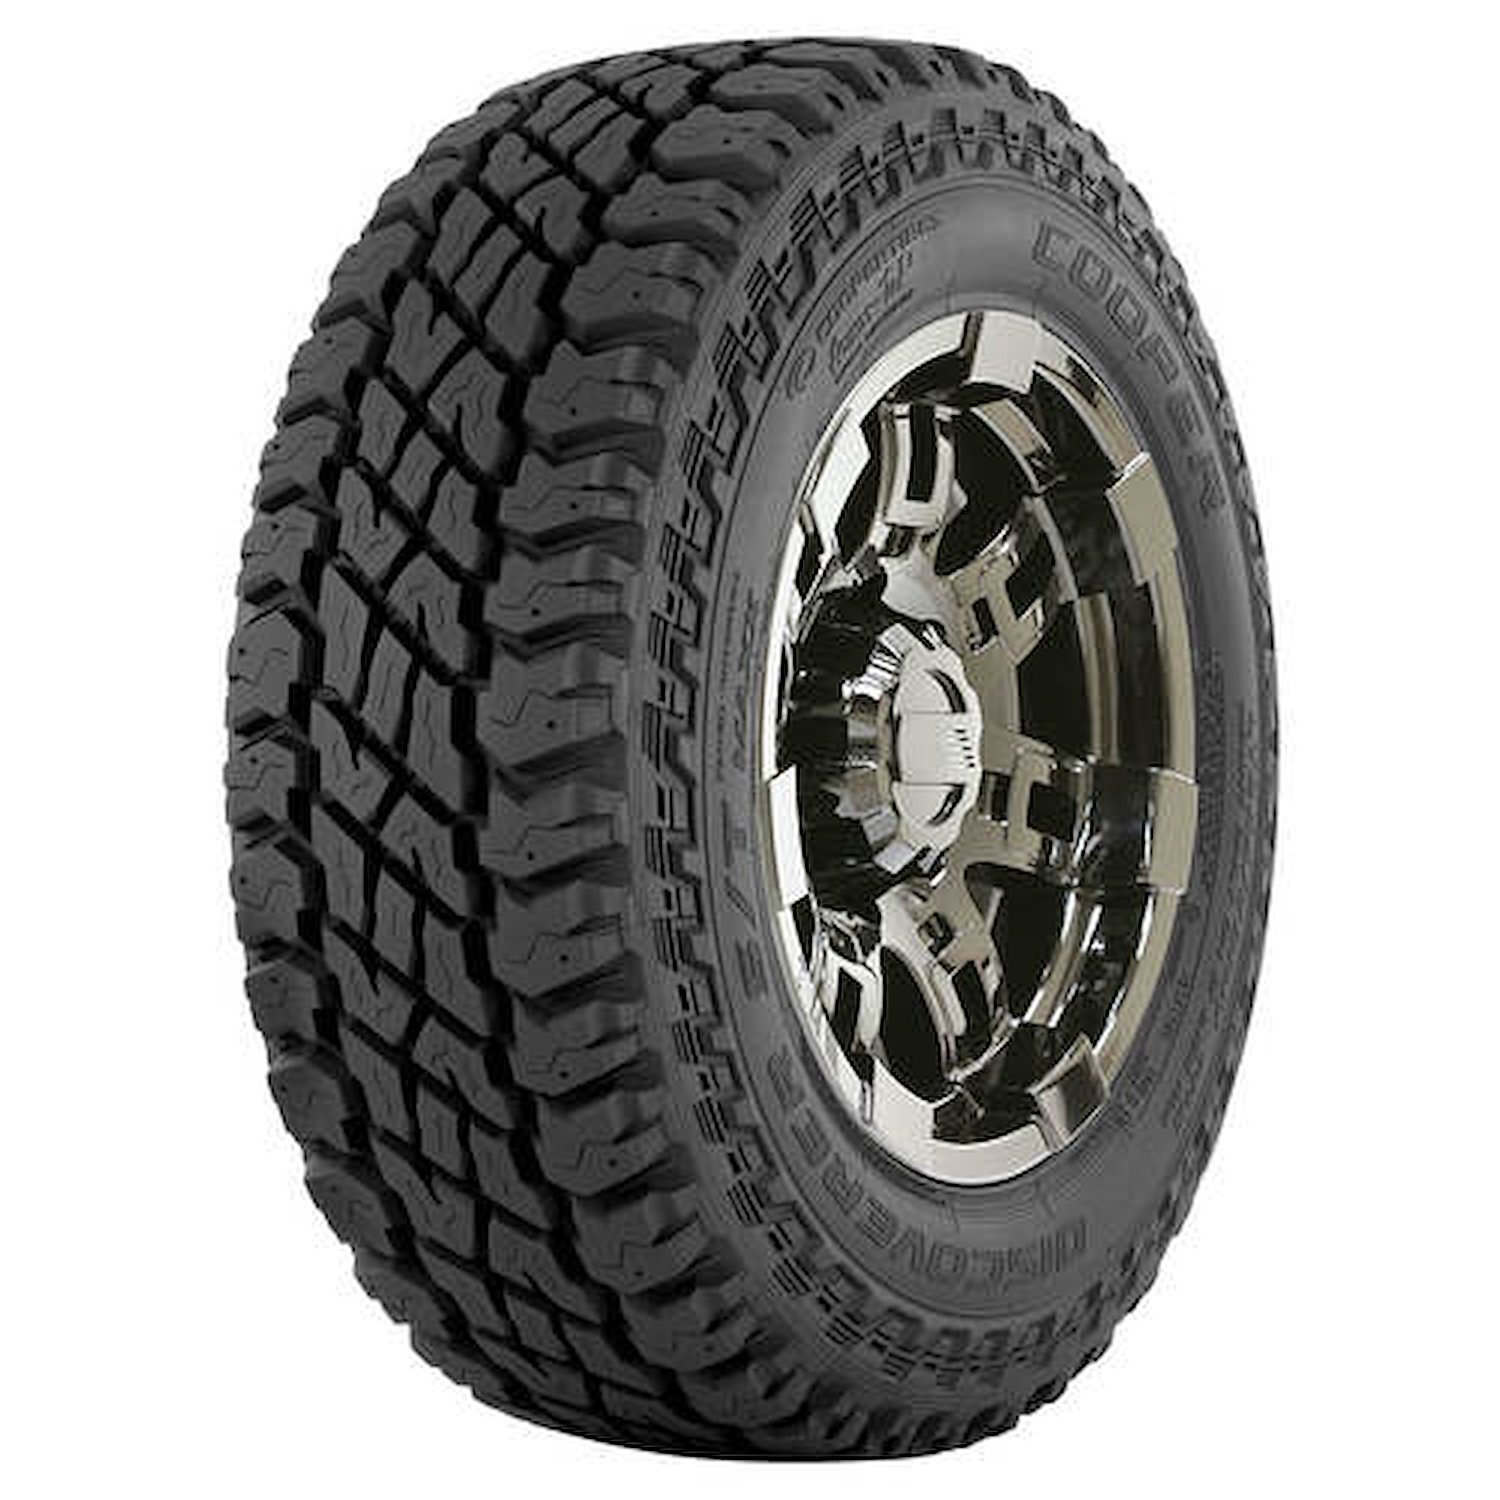 Discoverer S/T Maxx All-Terrain Tire, LT255/80R17